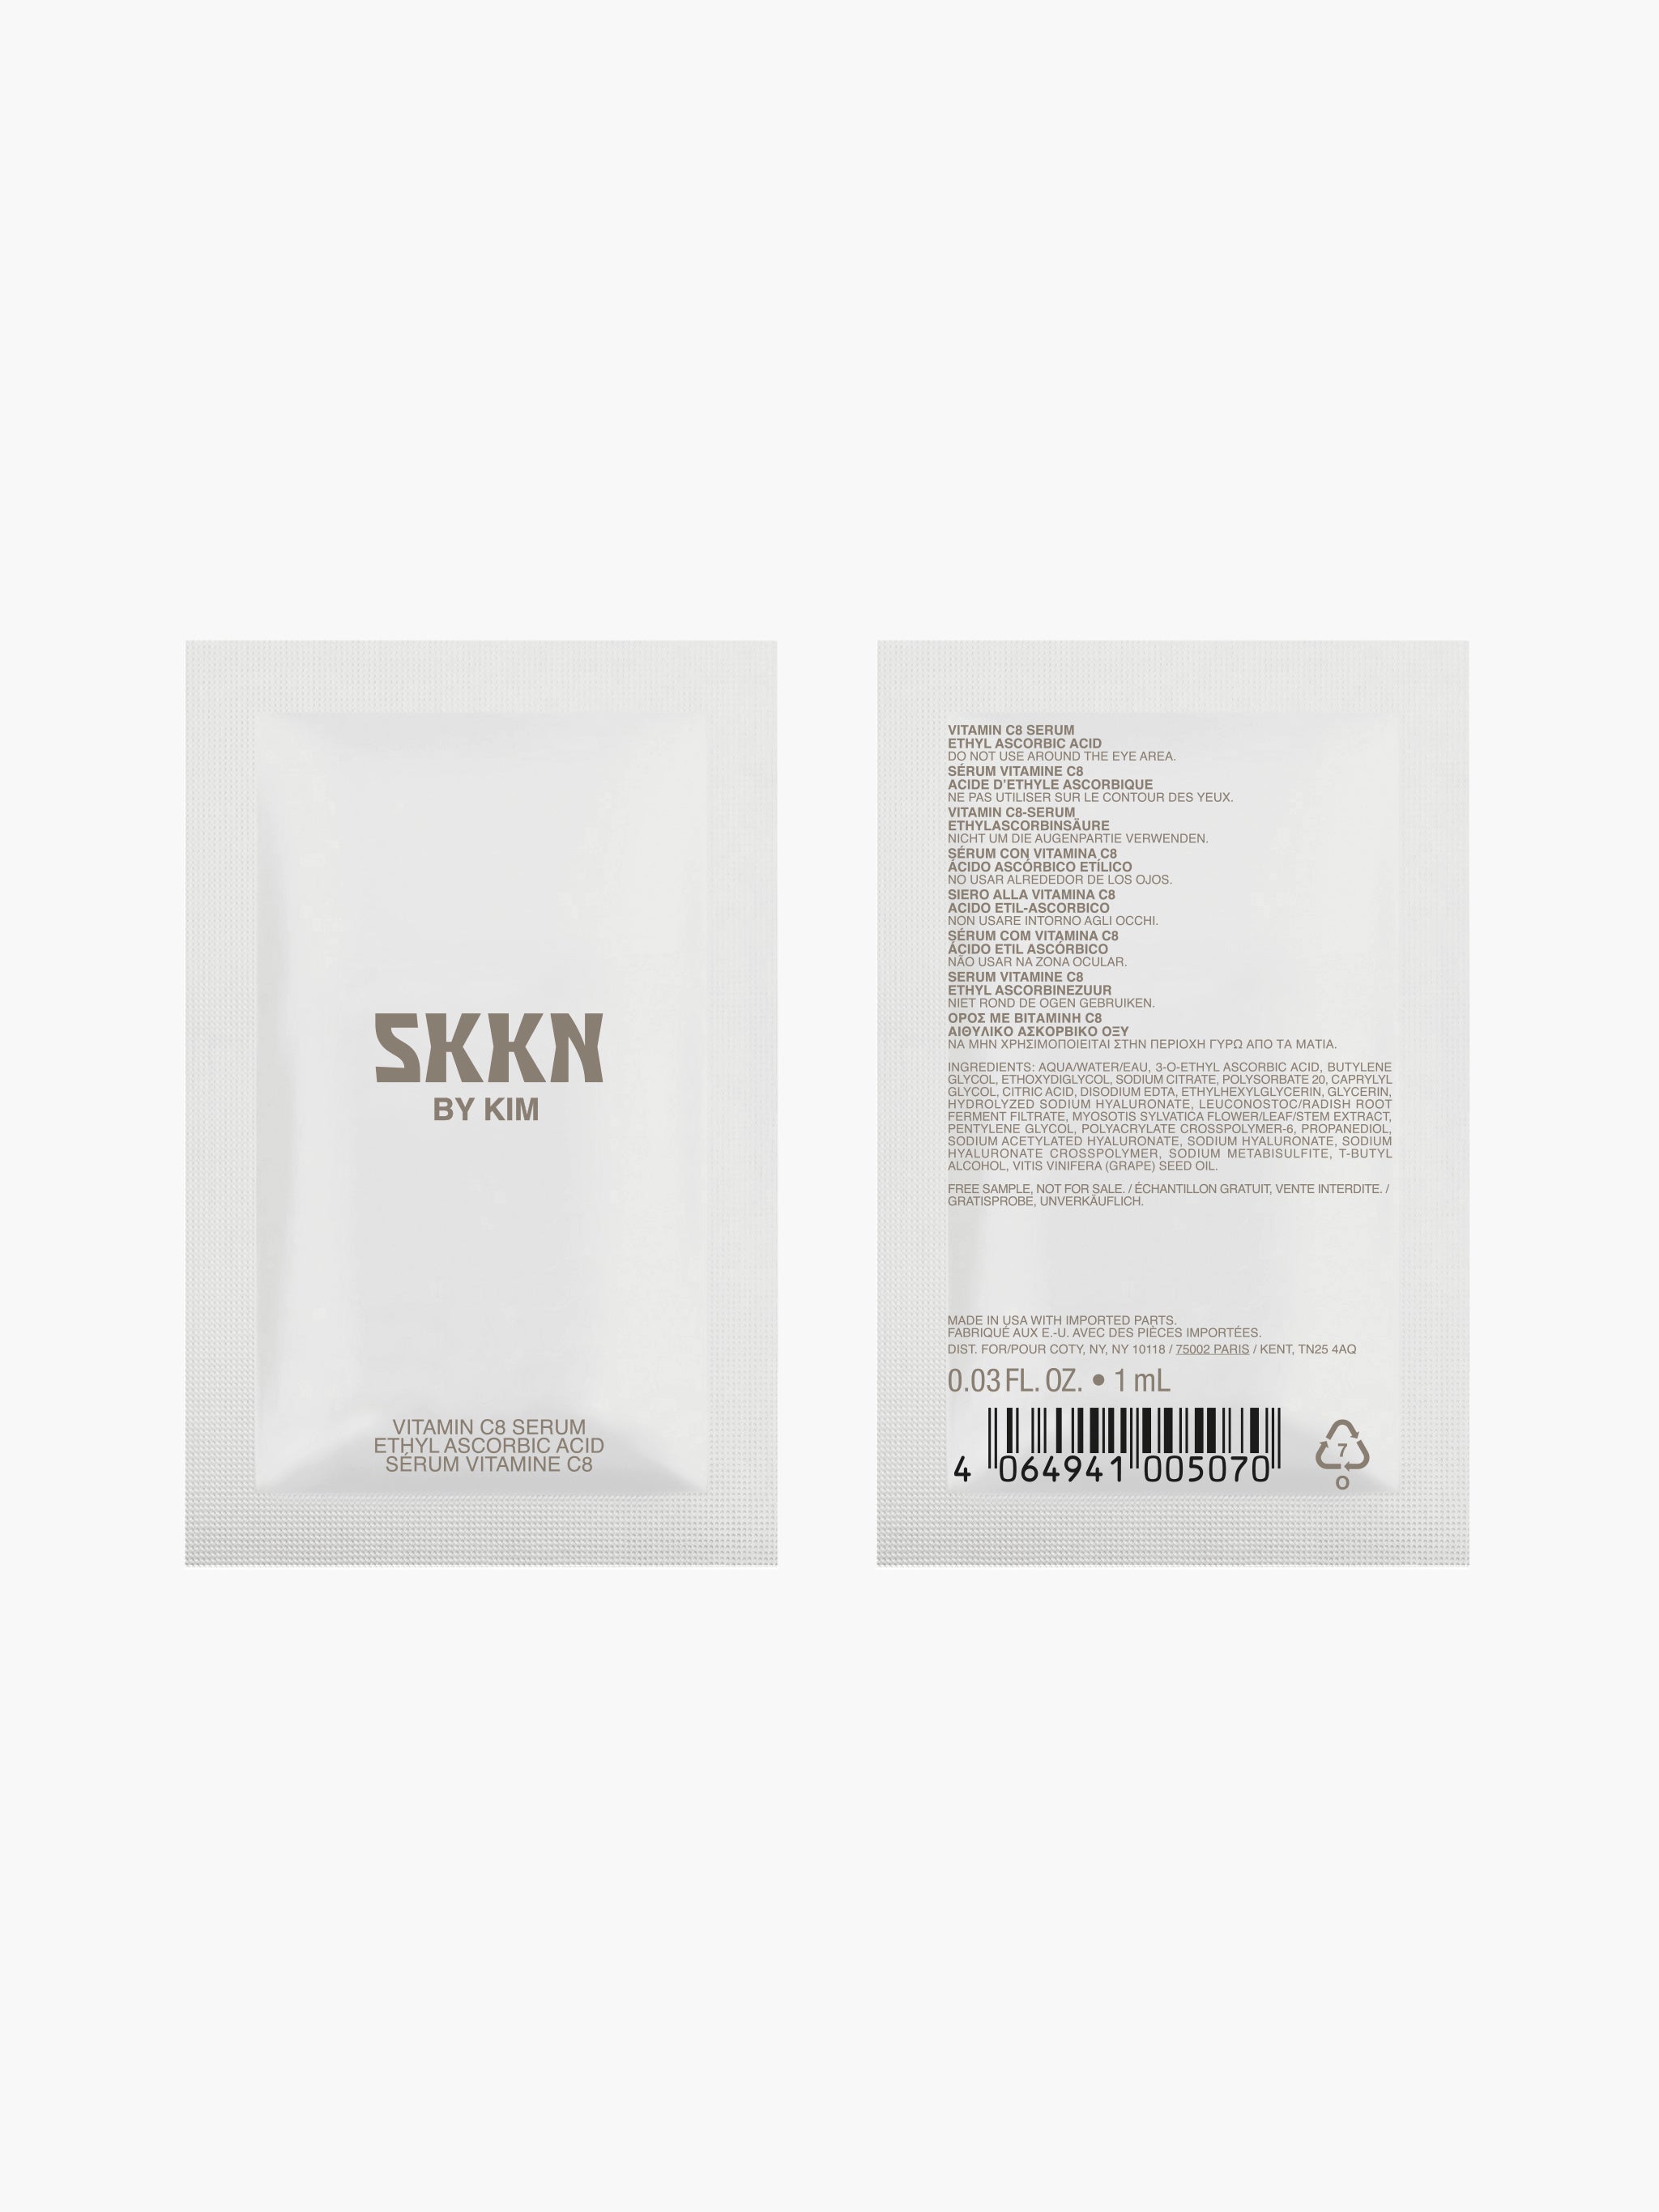 SKKN BY KIM Vitamin C8 Serum Sample